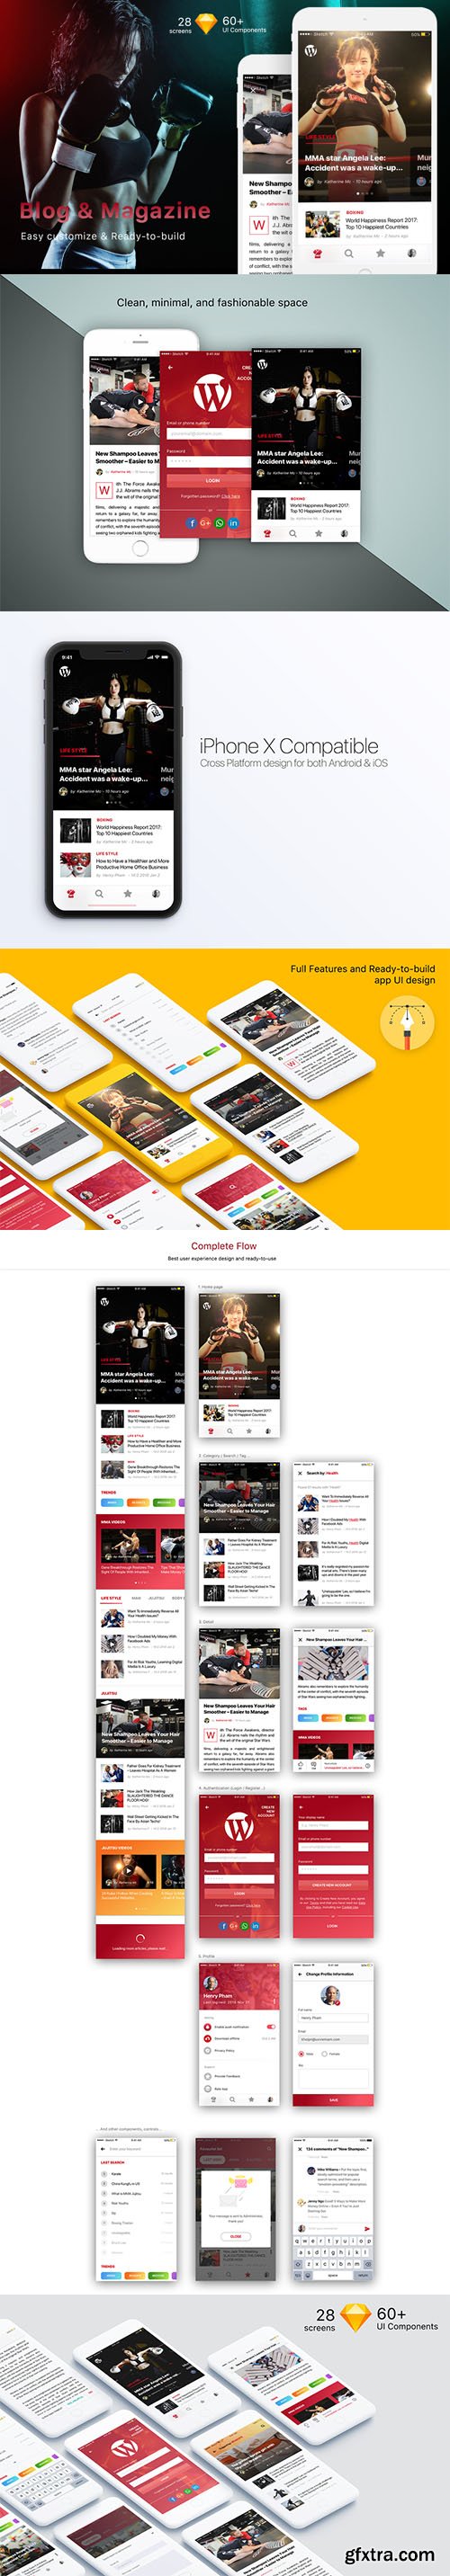 MB Blog & Magazine - Cross Platform design for Newspaper, Blog & Magazine Mobile Designs